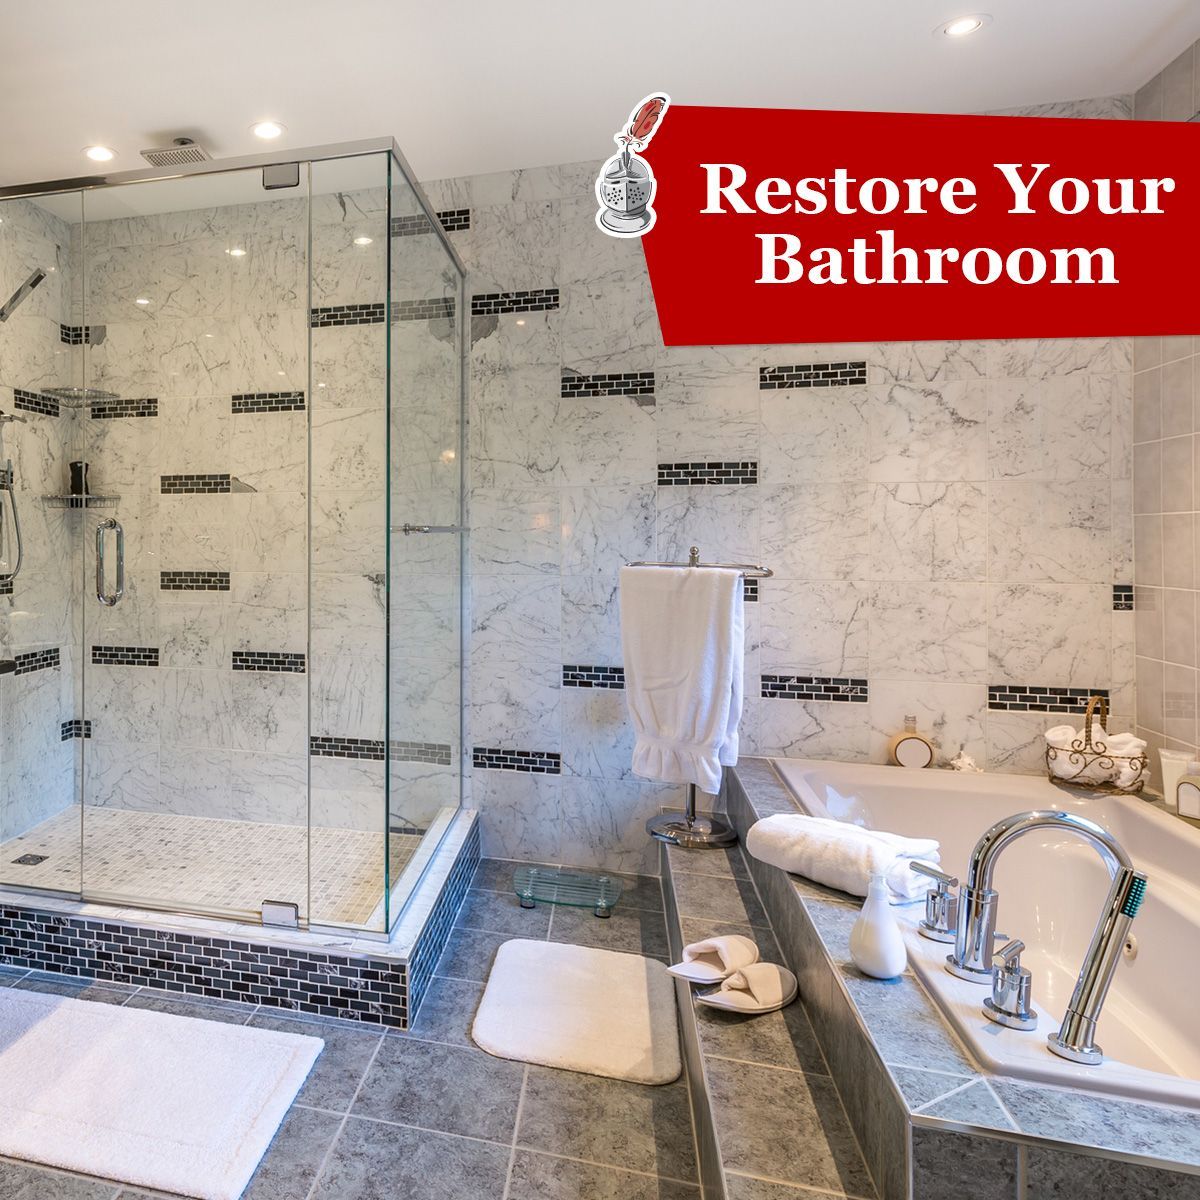 Restore Your Bathroom